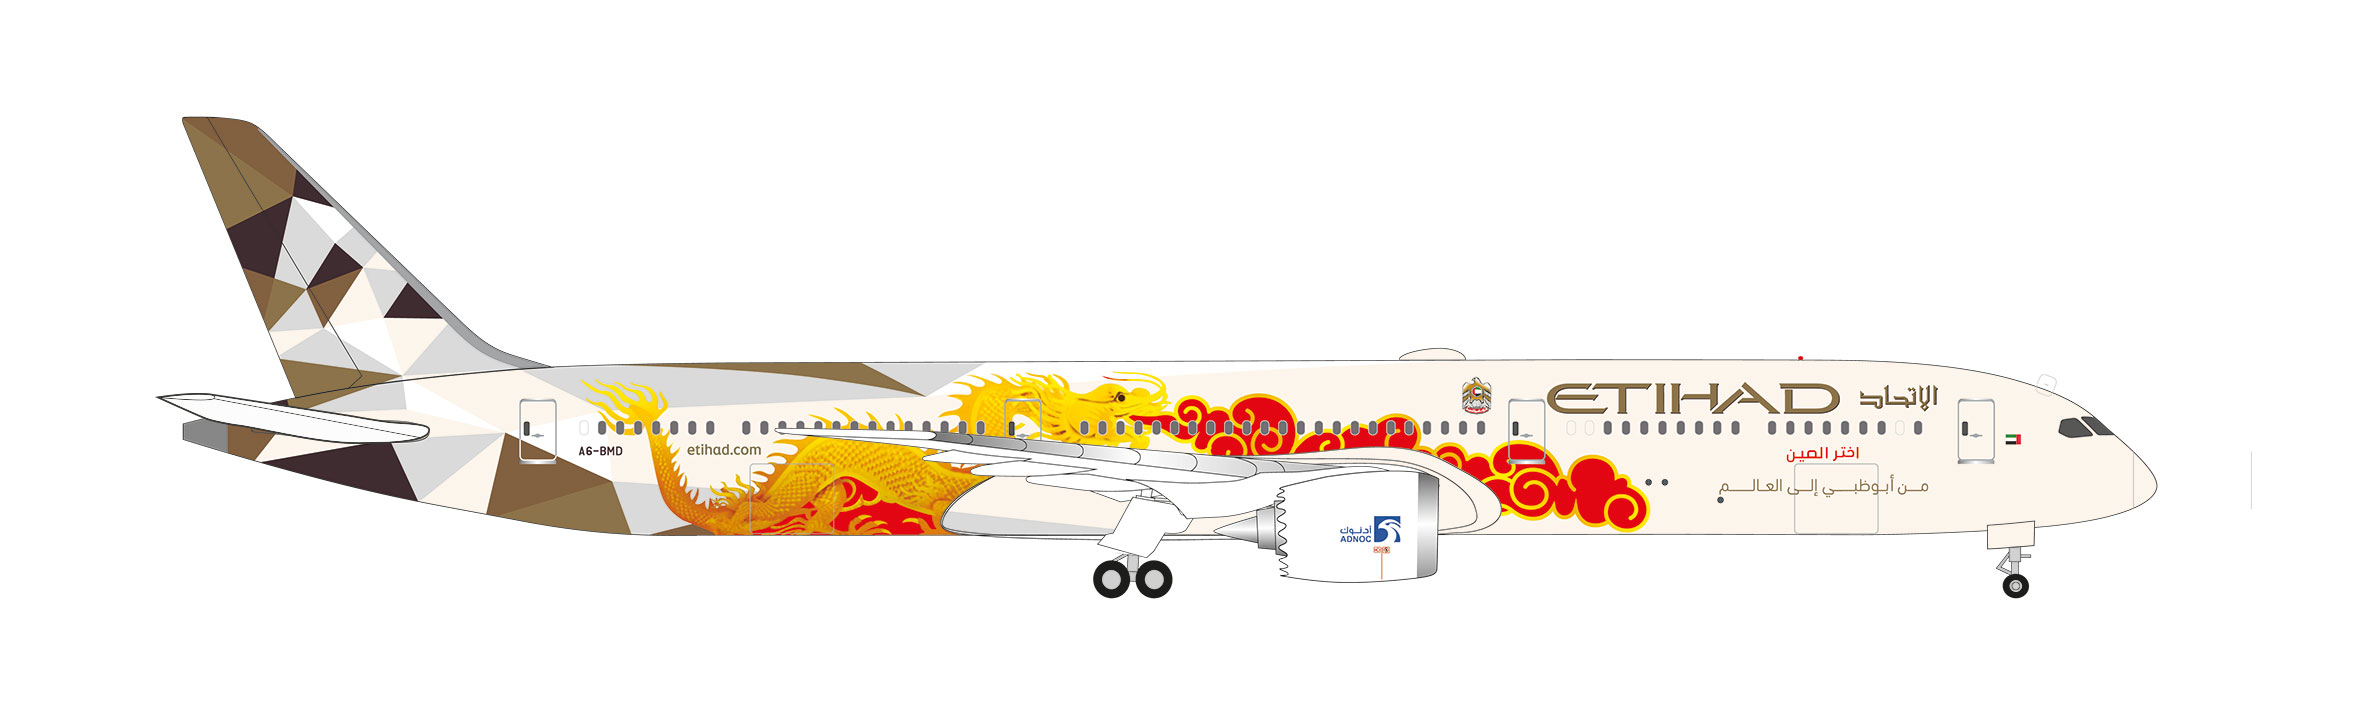 Boeing 787-10 Ethiad China 1:500